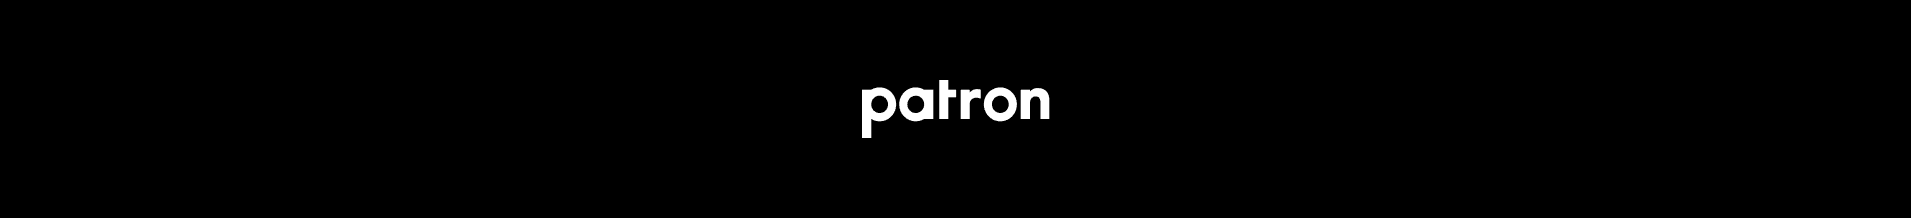 PATRON-NFT 橫幅